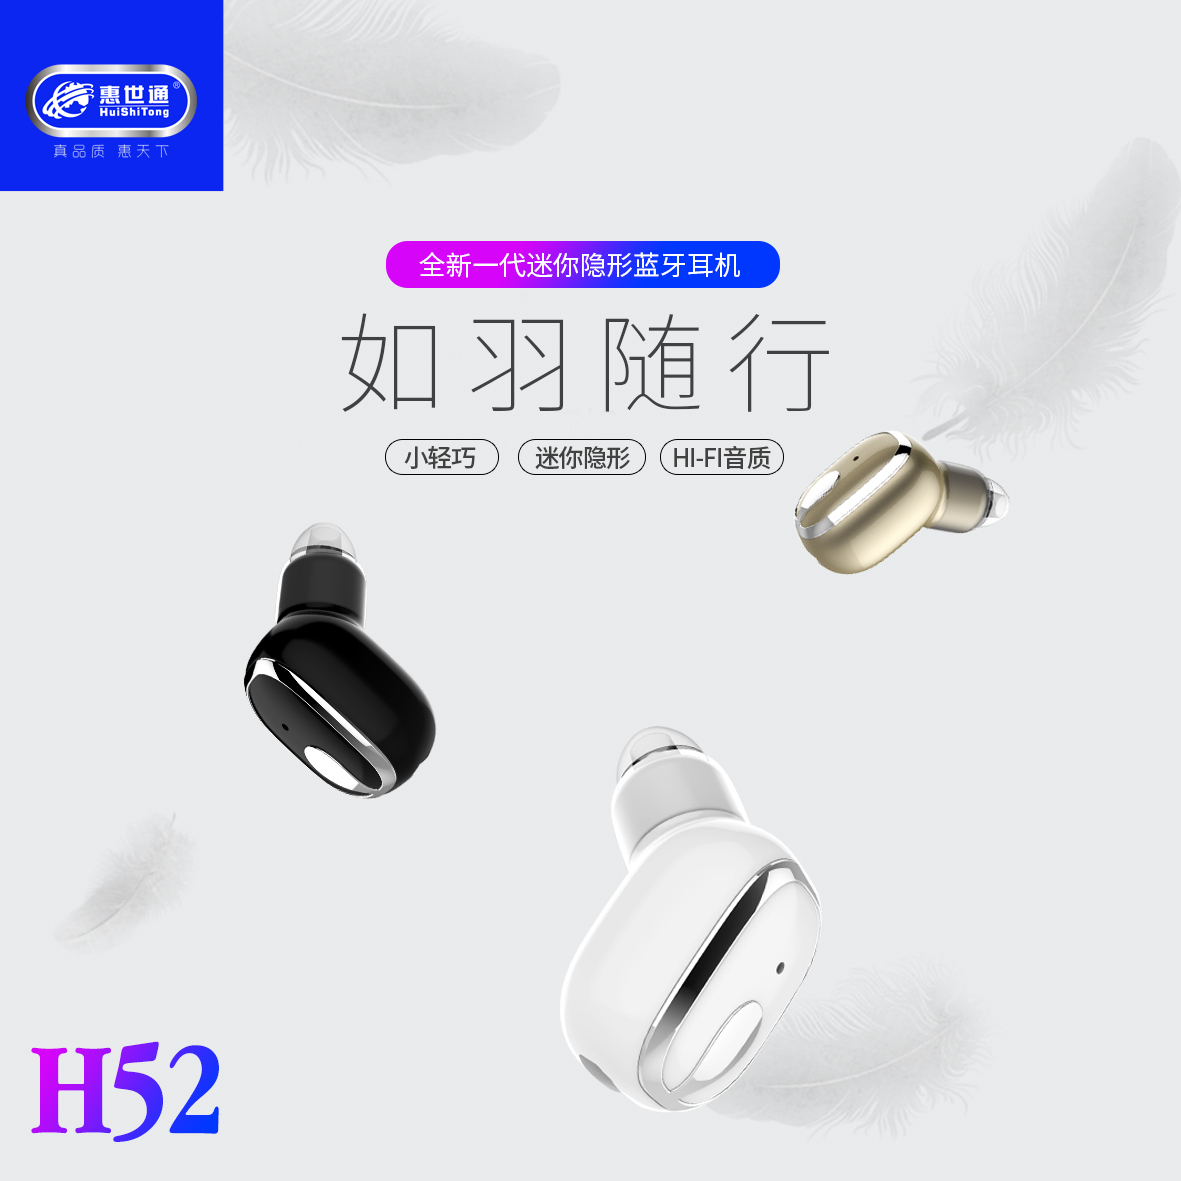 H52-蓝牙耳机_01.jpg